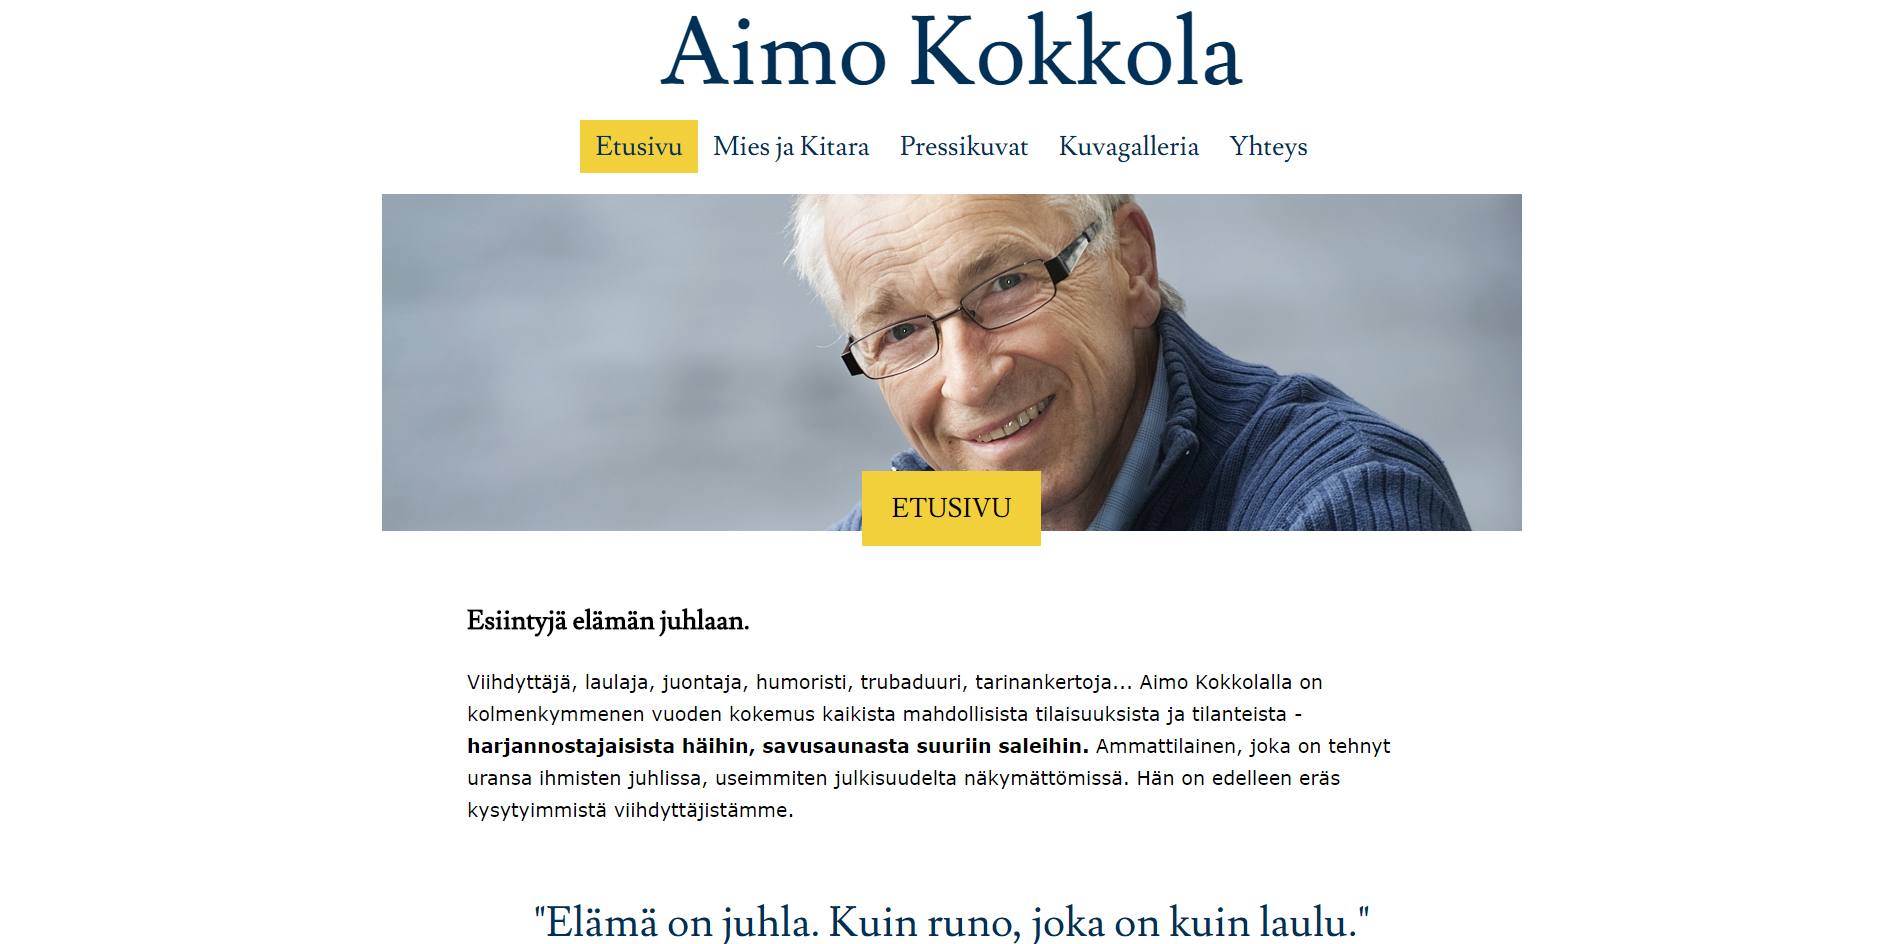 Aimokokkola.fi front page